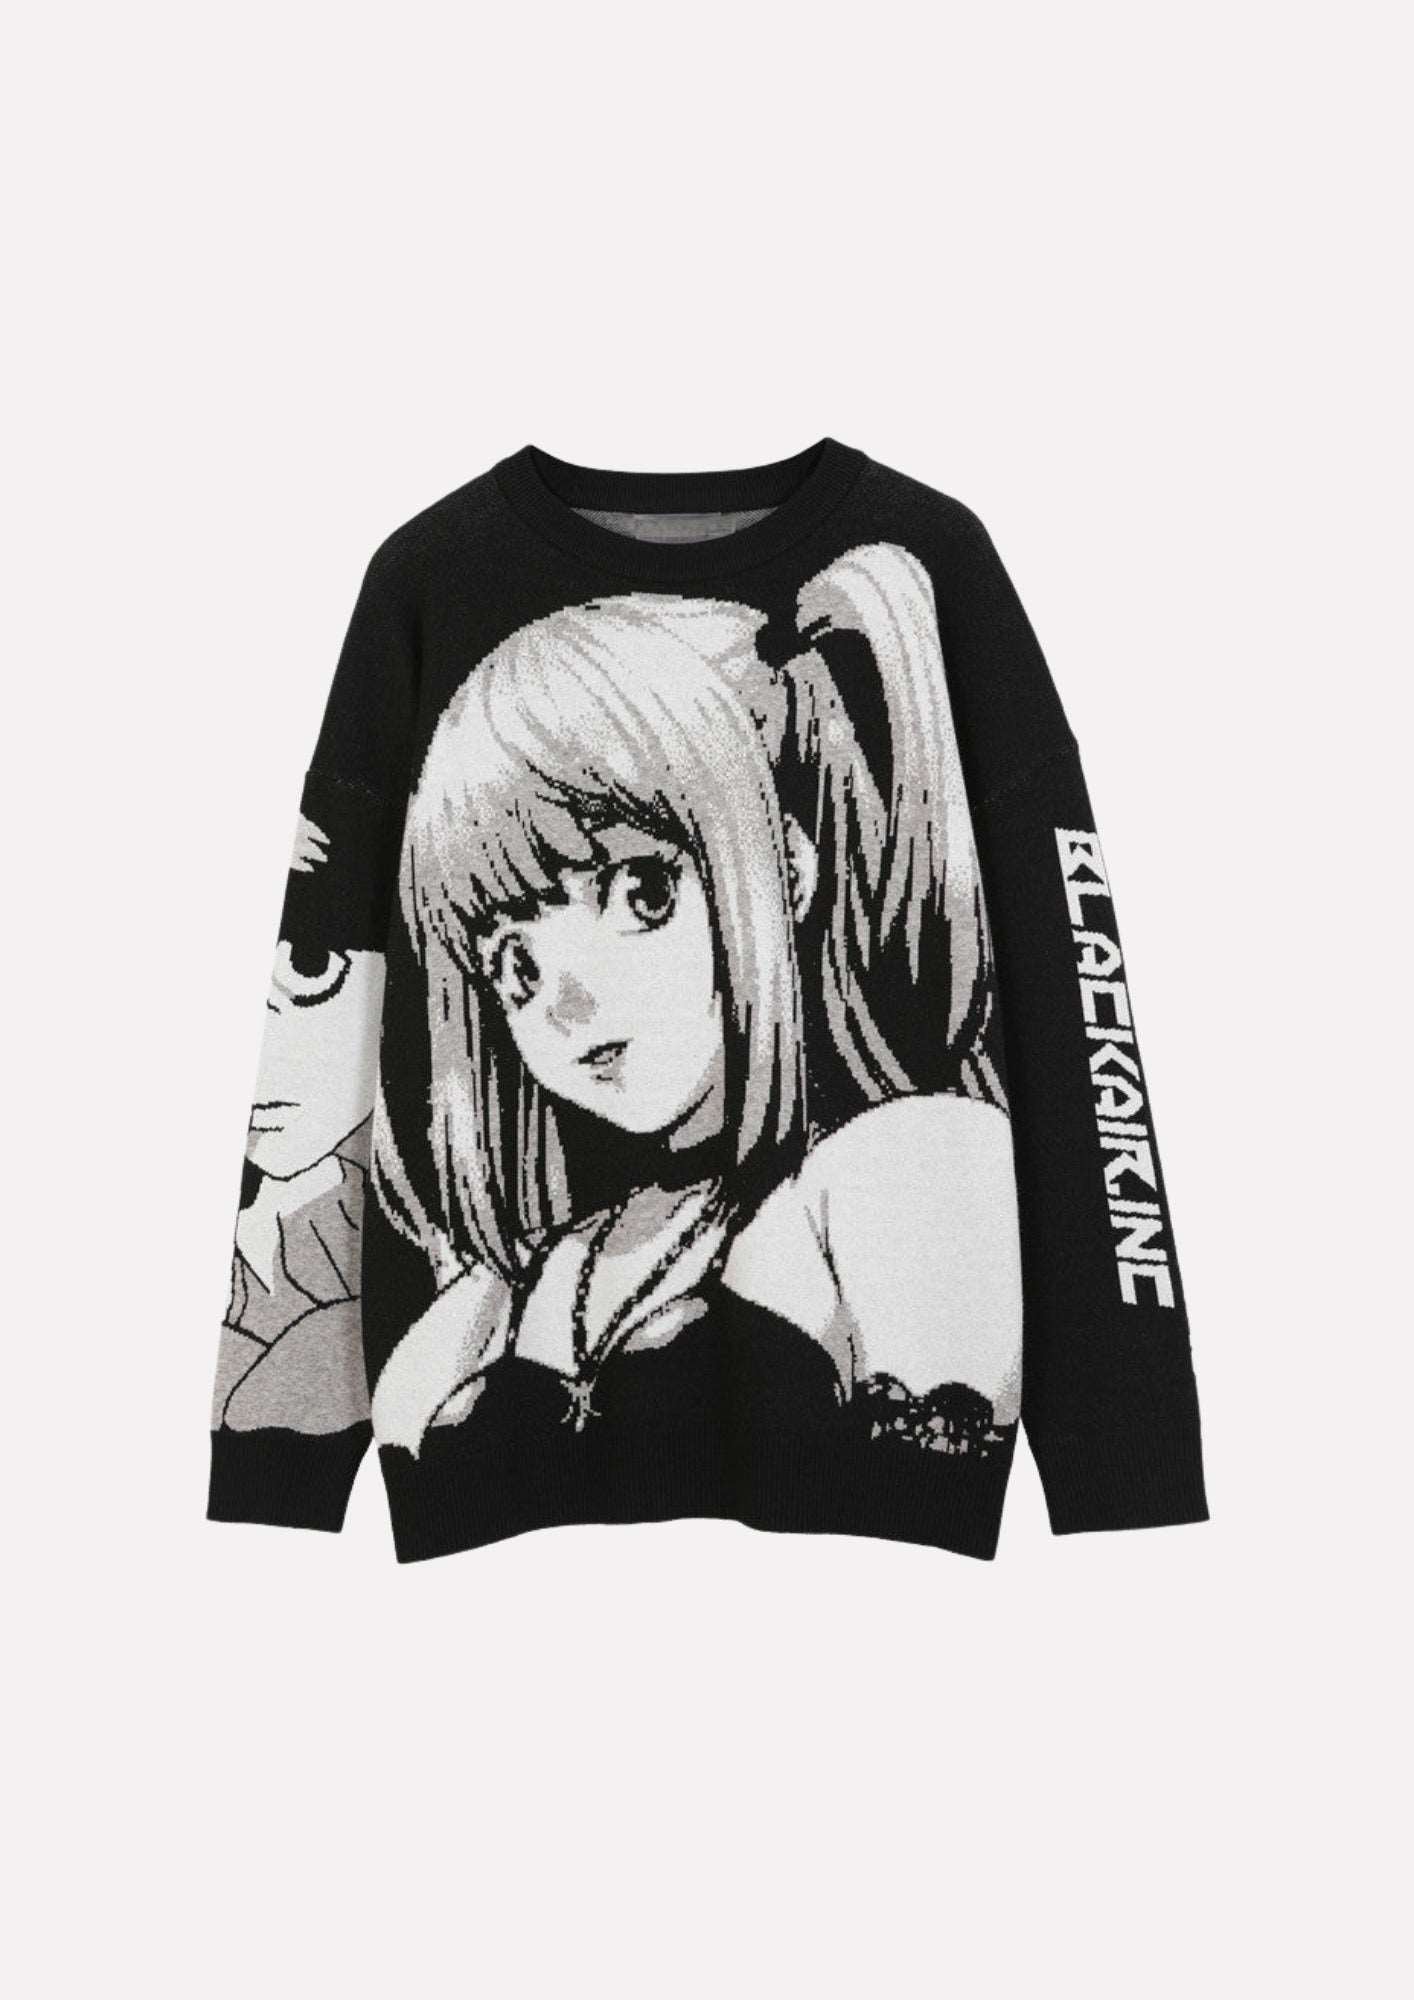 Anime Sweater